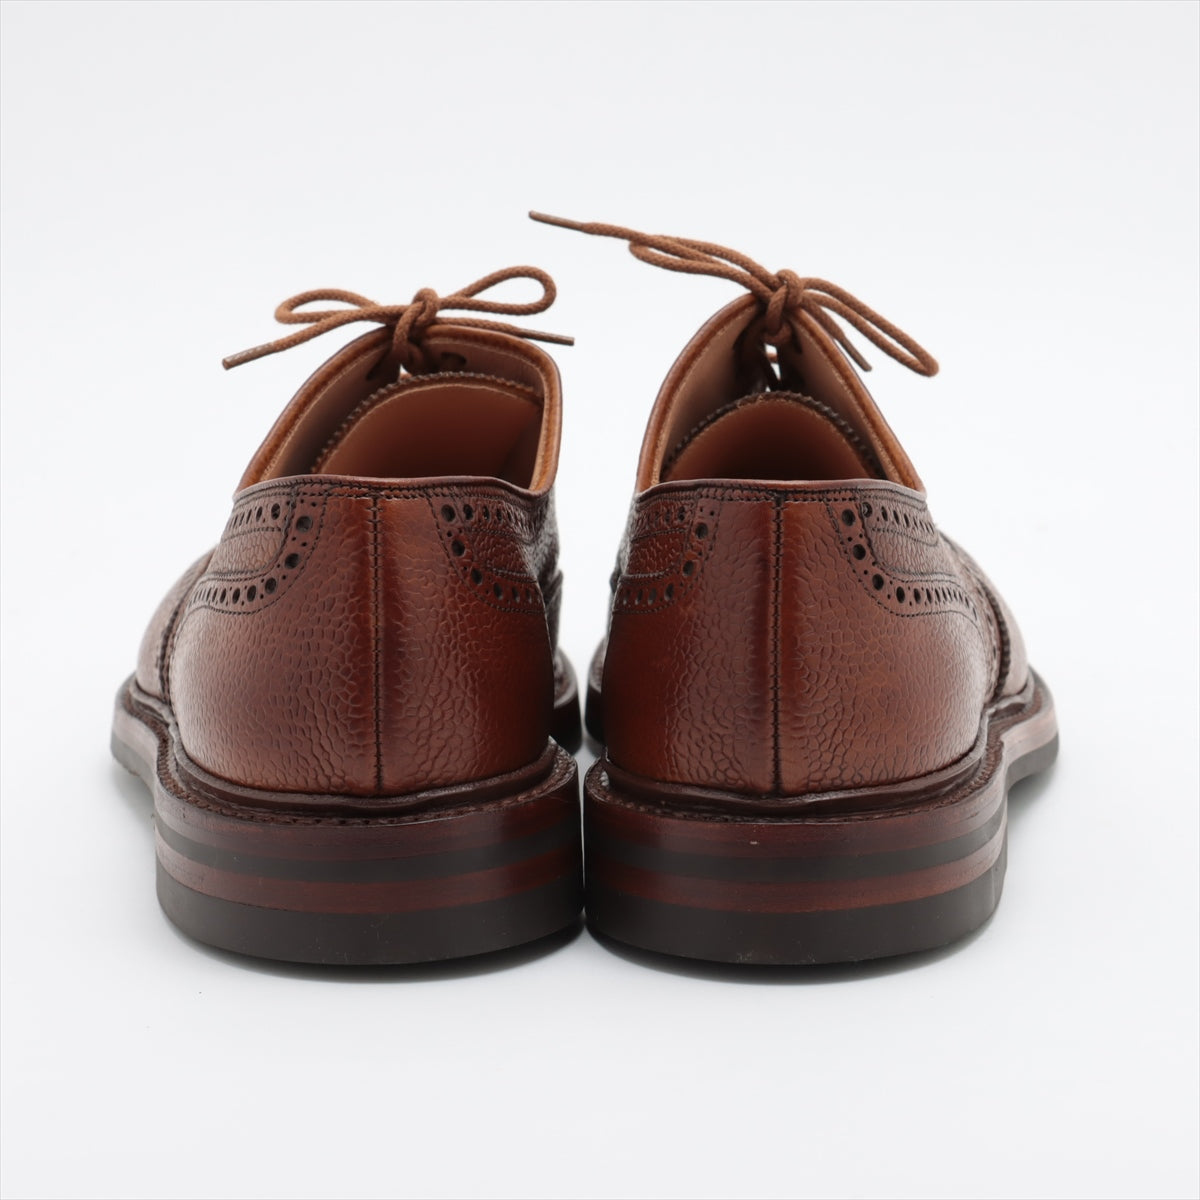 Crockett & Jones Leather Leather shoes 9E Men's Brown PEMBROKE2 wingtip